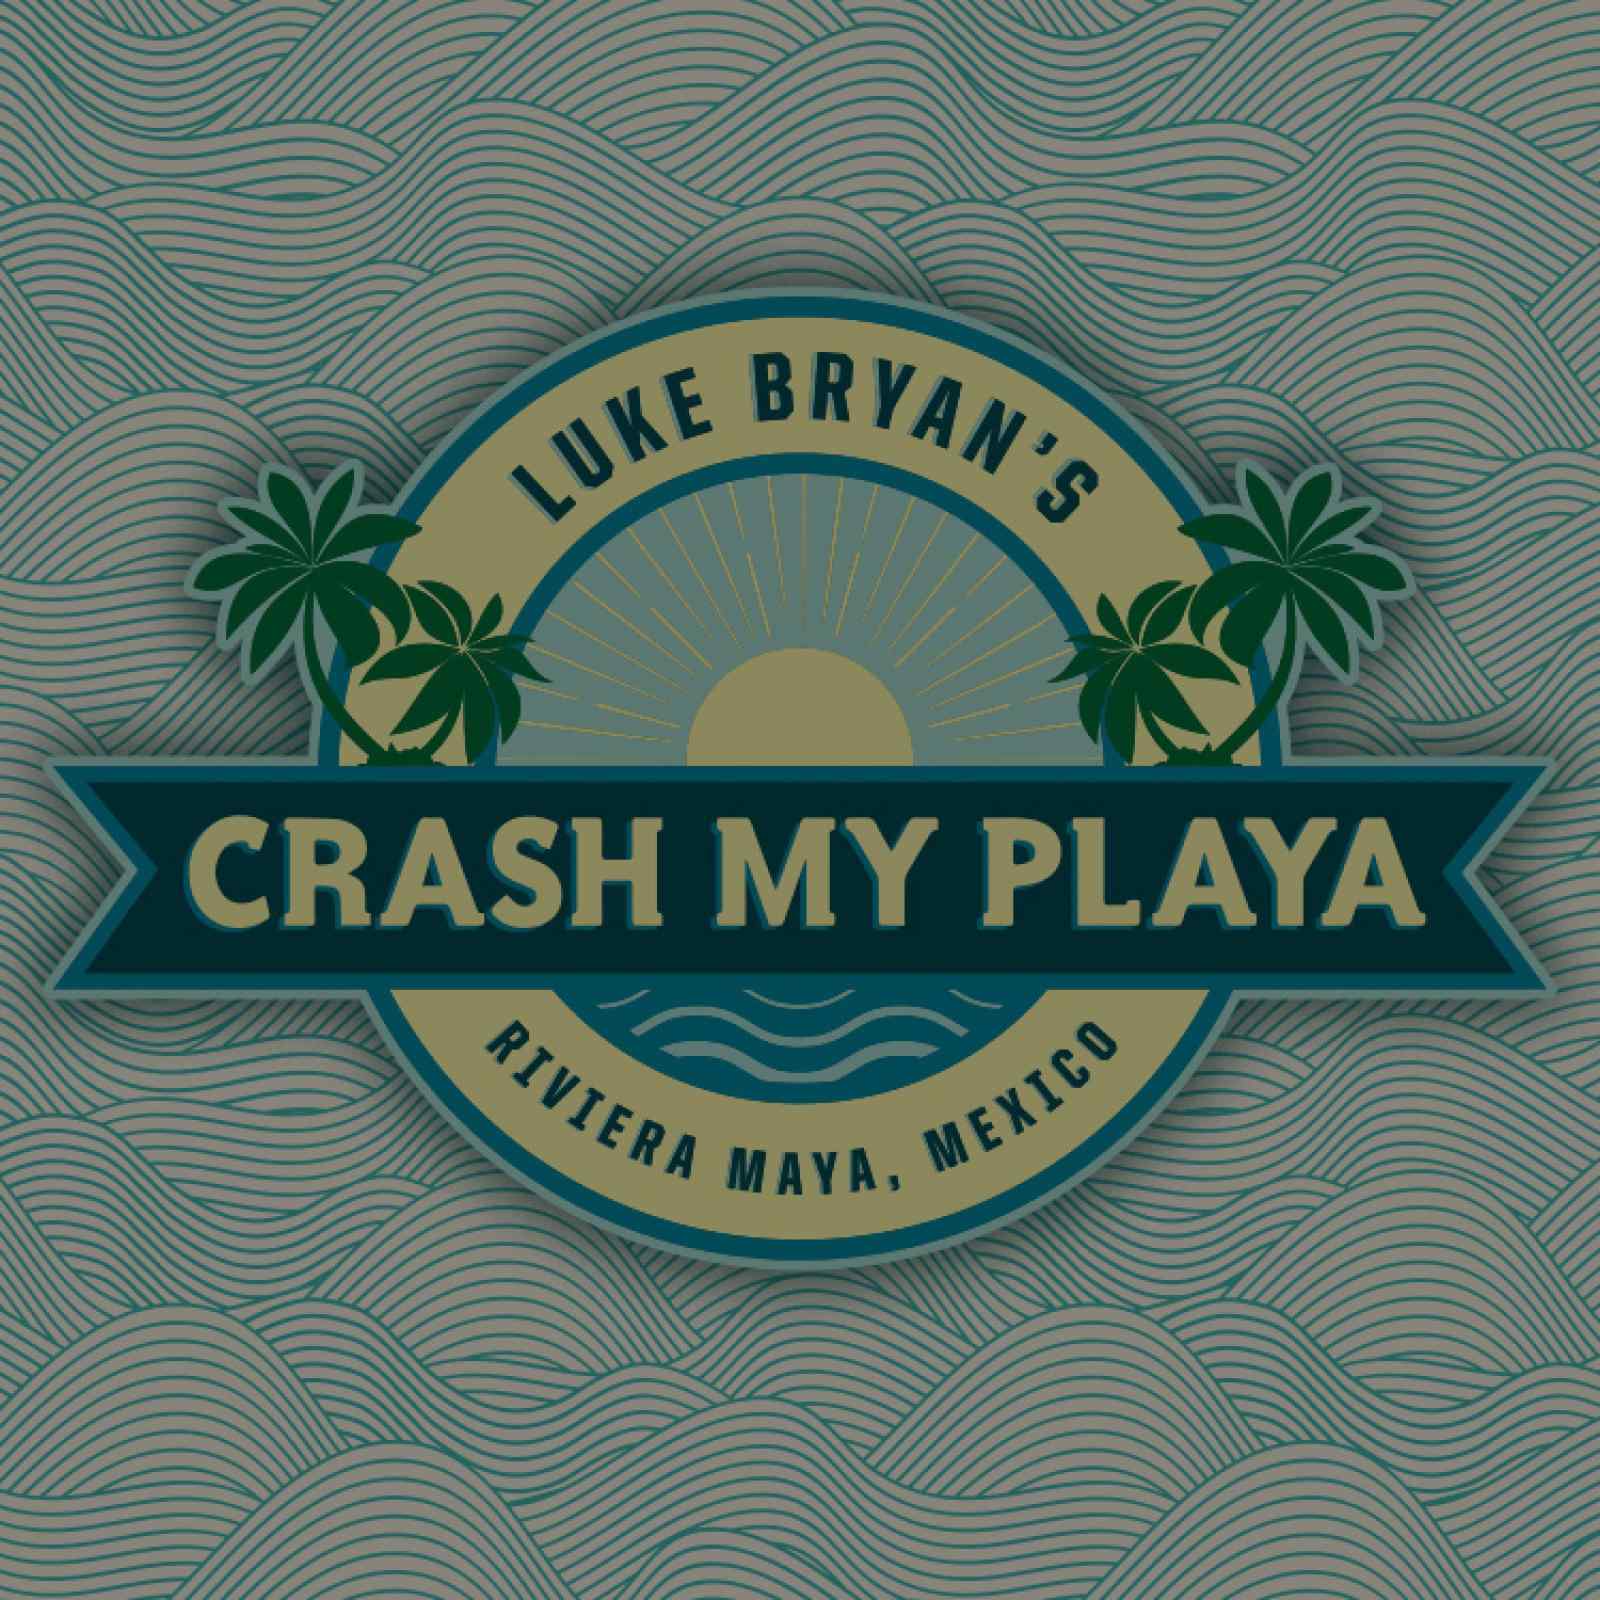 Crash My Playa 2018 - On Sale Now!